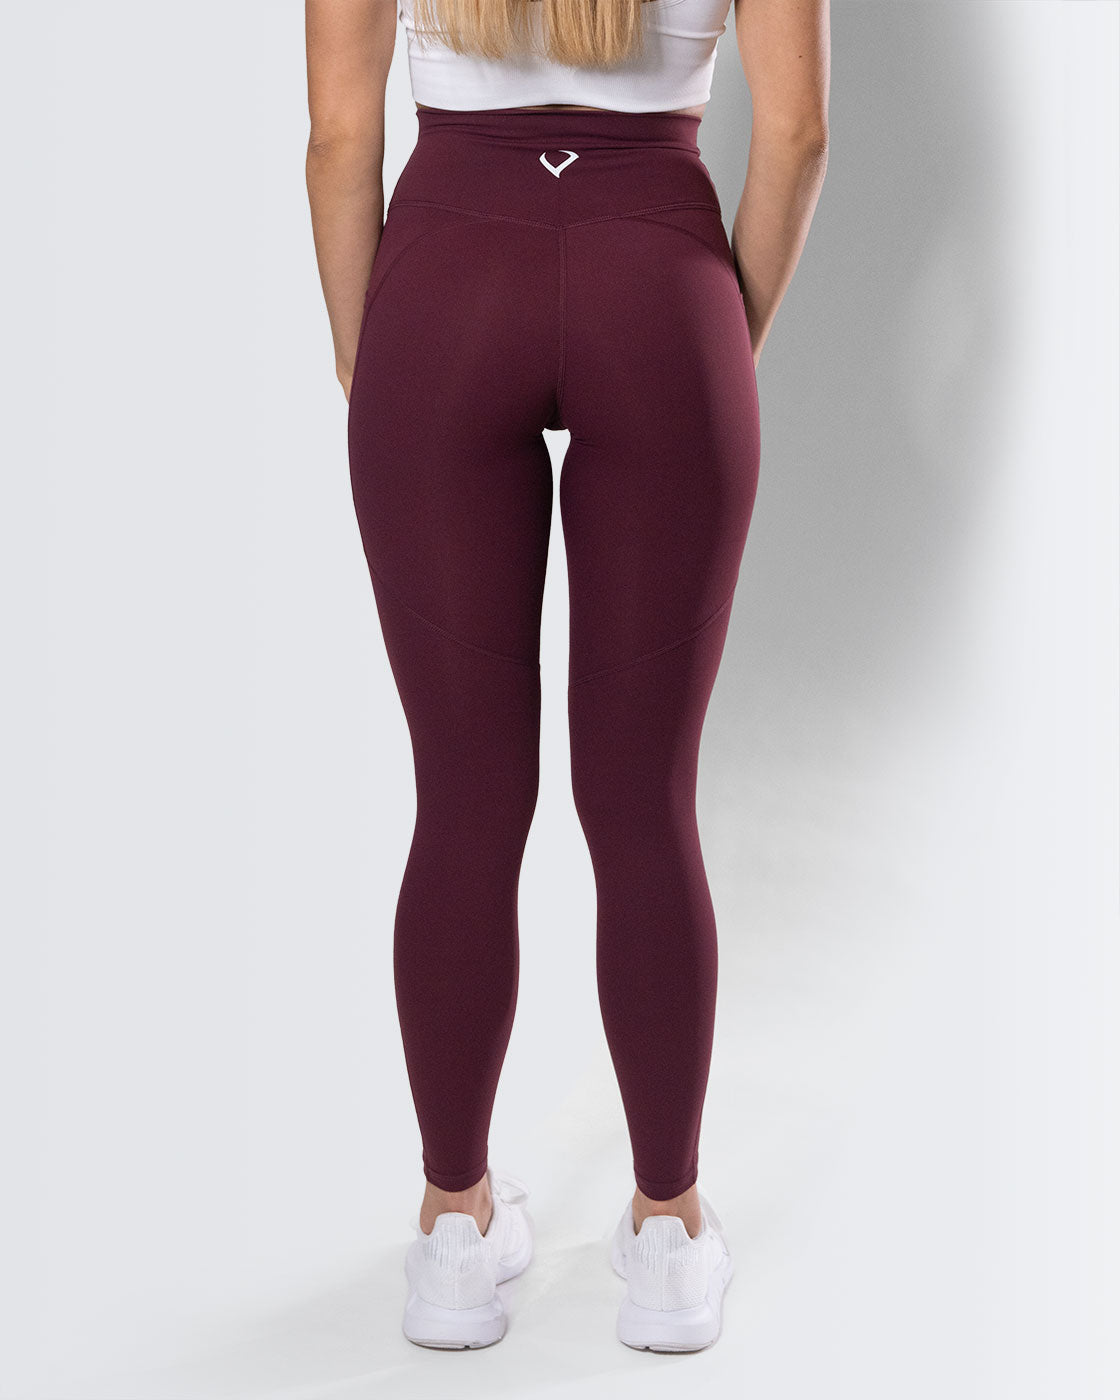 Andar leggings Color: burgundy Size : 4 Price : $25 - Depop